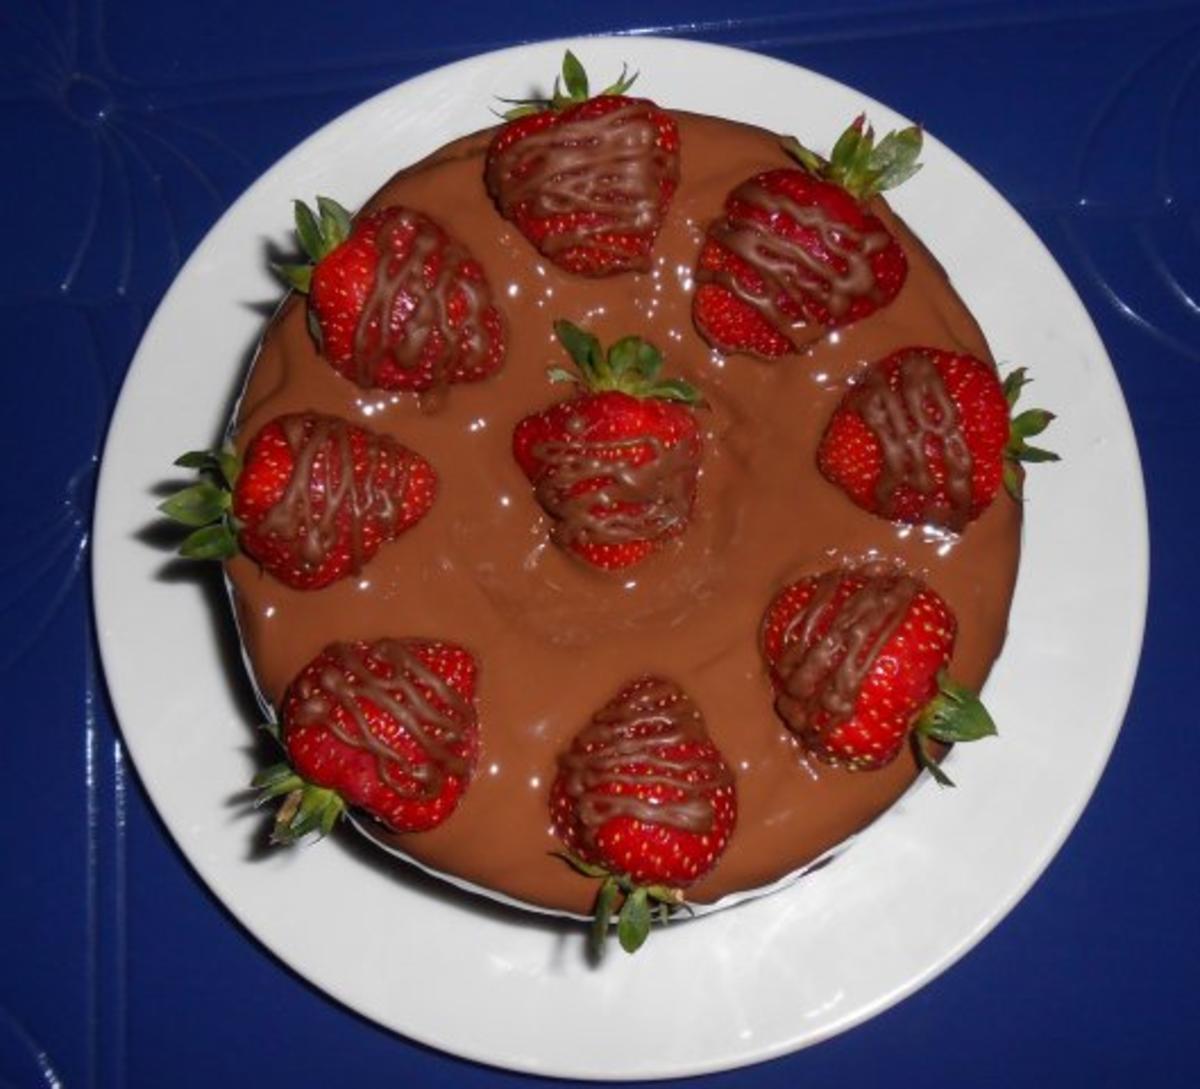 Schokoladen-Nuss-Kuchen mit Erdbeeren - Rezept - Bild Nr. 19